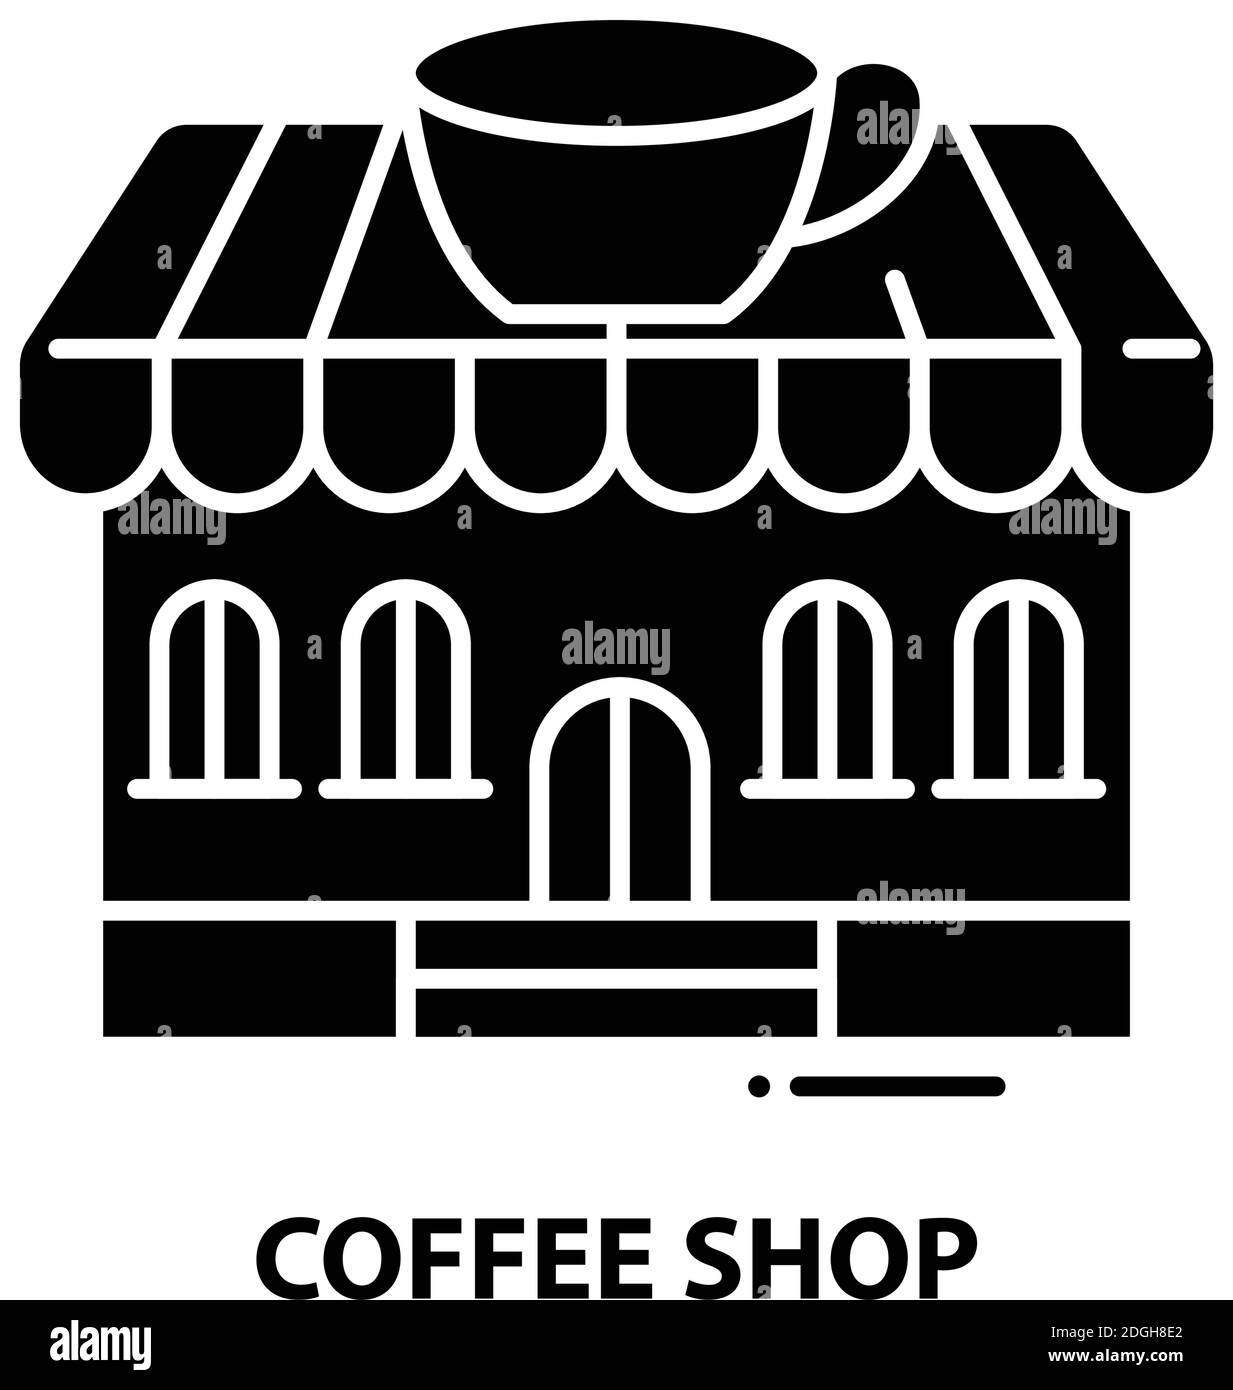 coffee shop symbol icon, black vector sign with editable strokes, concept illustration Stock Vector